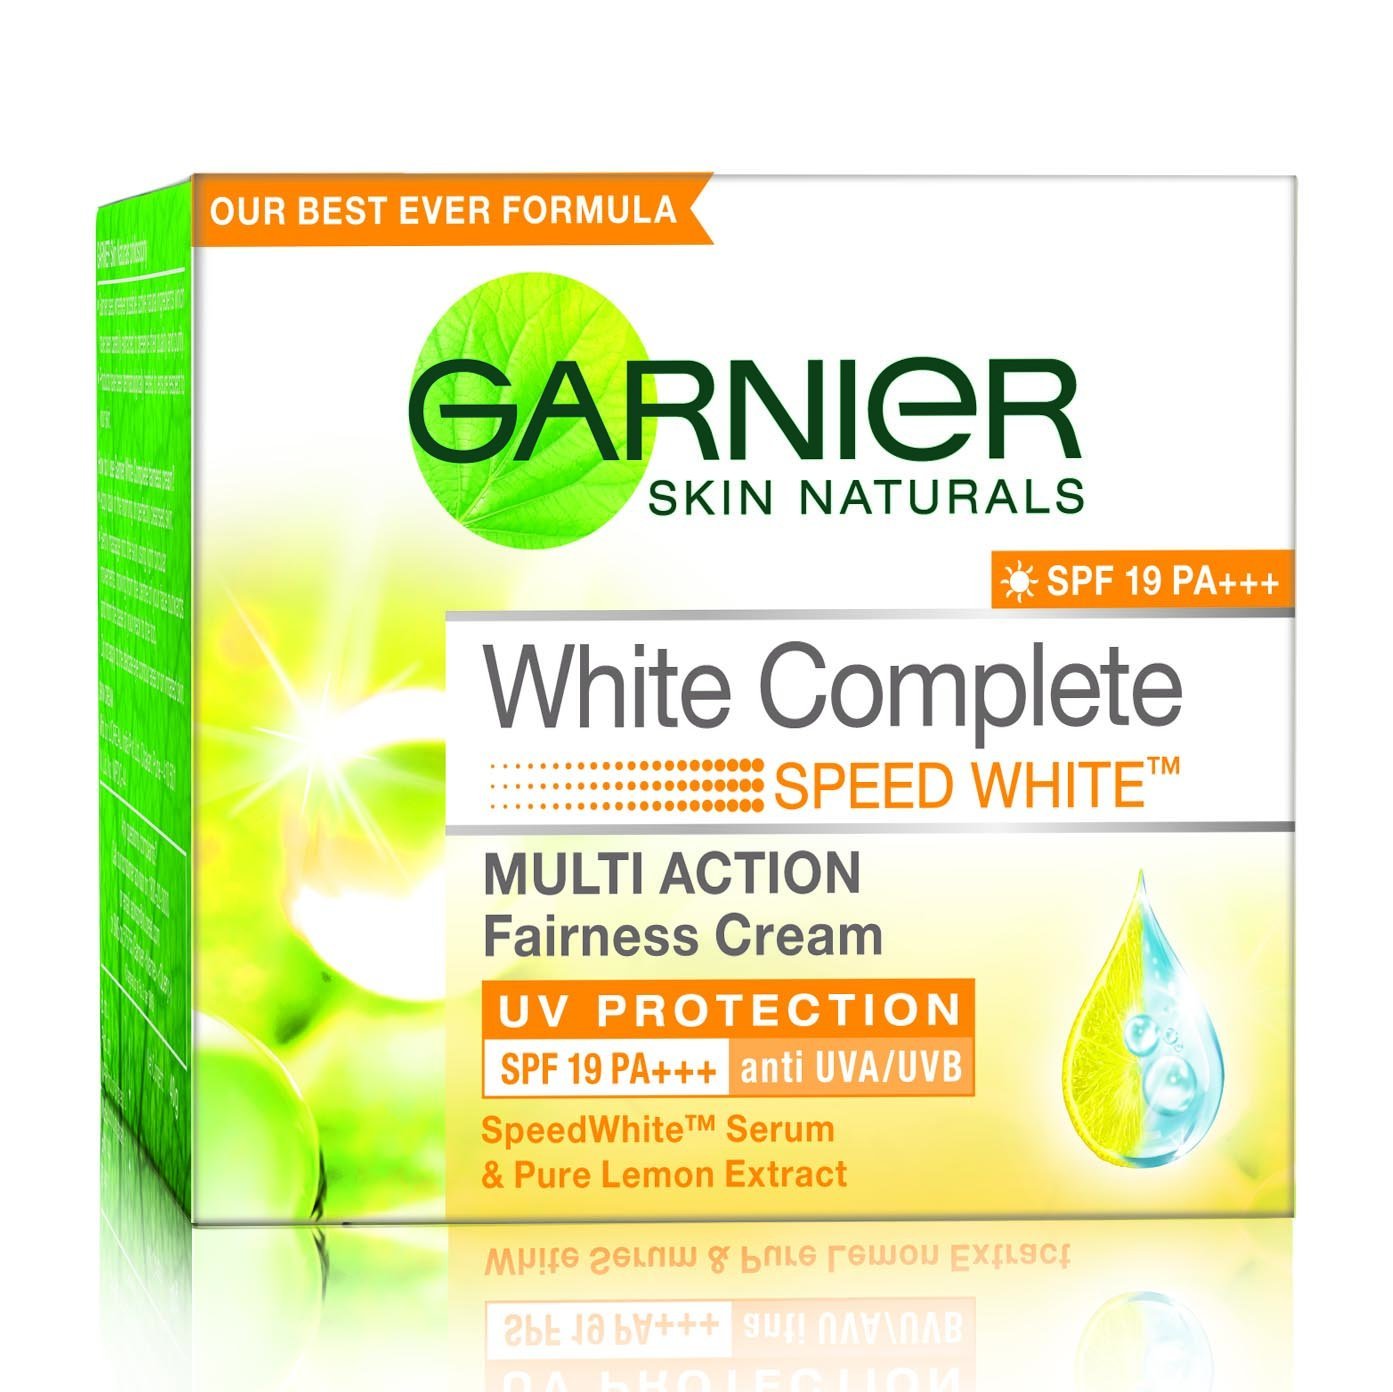 Garnier White Complete Multi-Action Fairness Cream Fairness Cream Brands in The World 